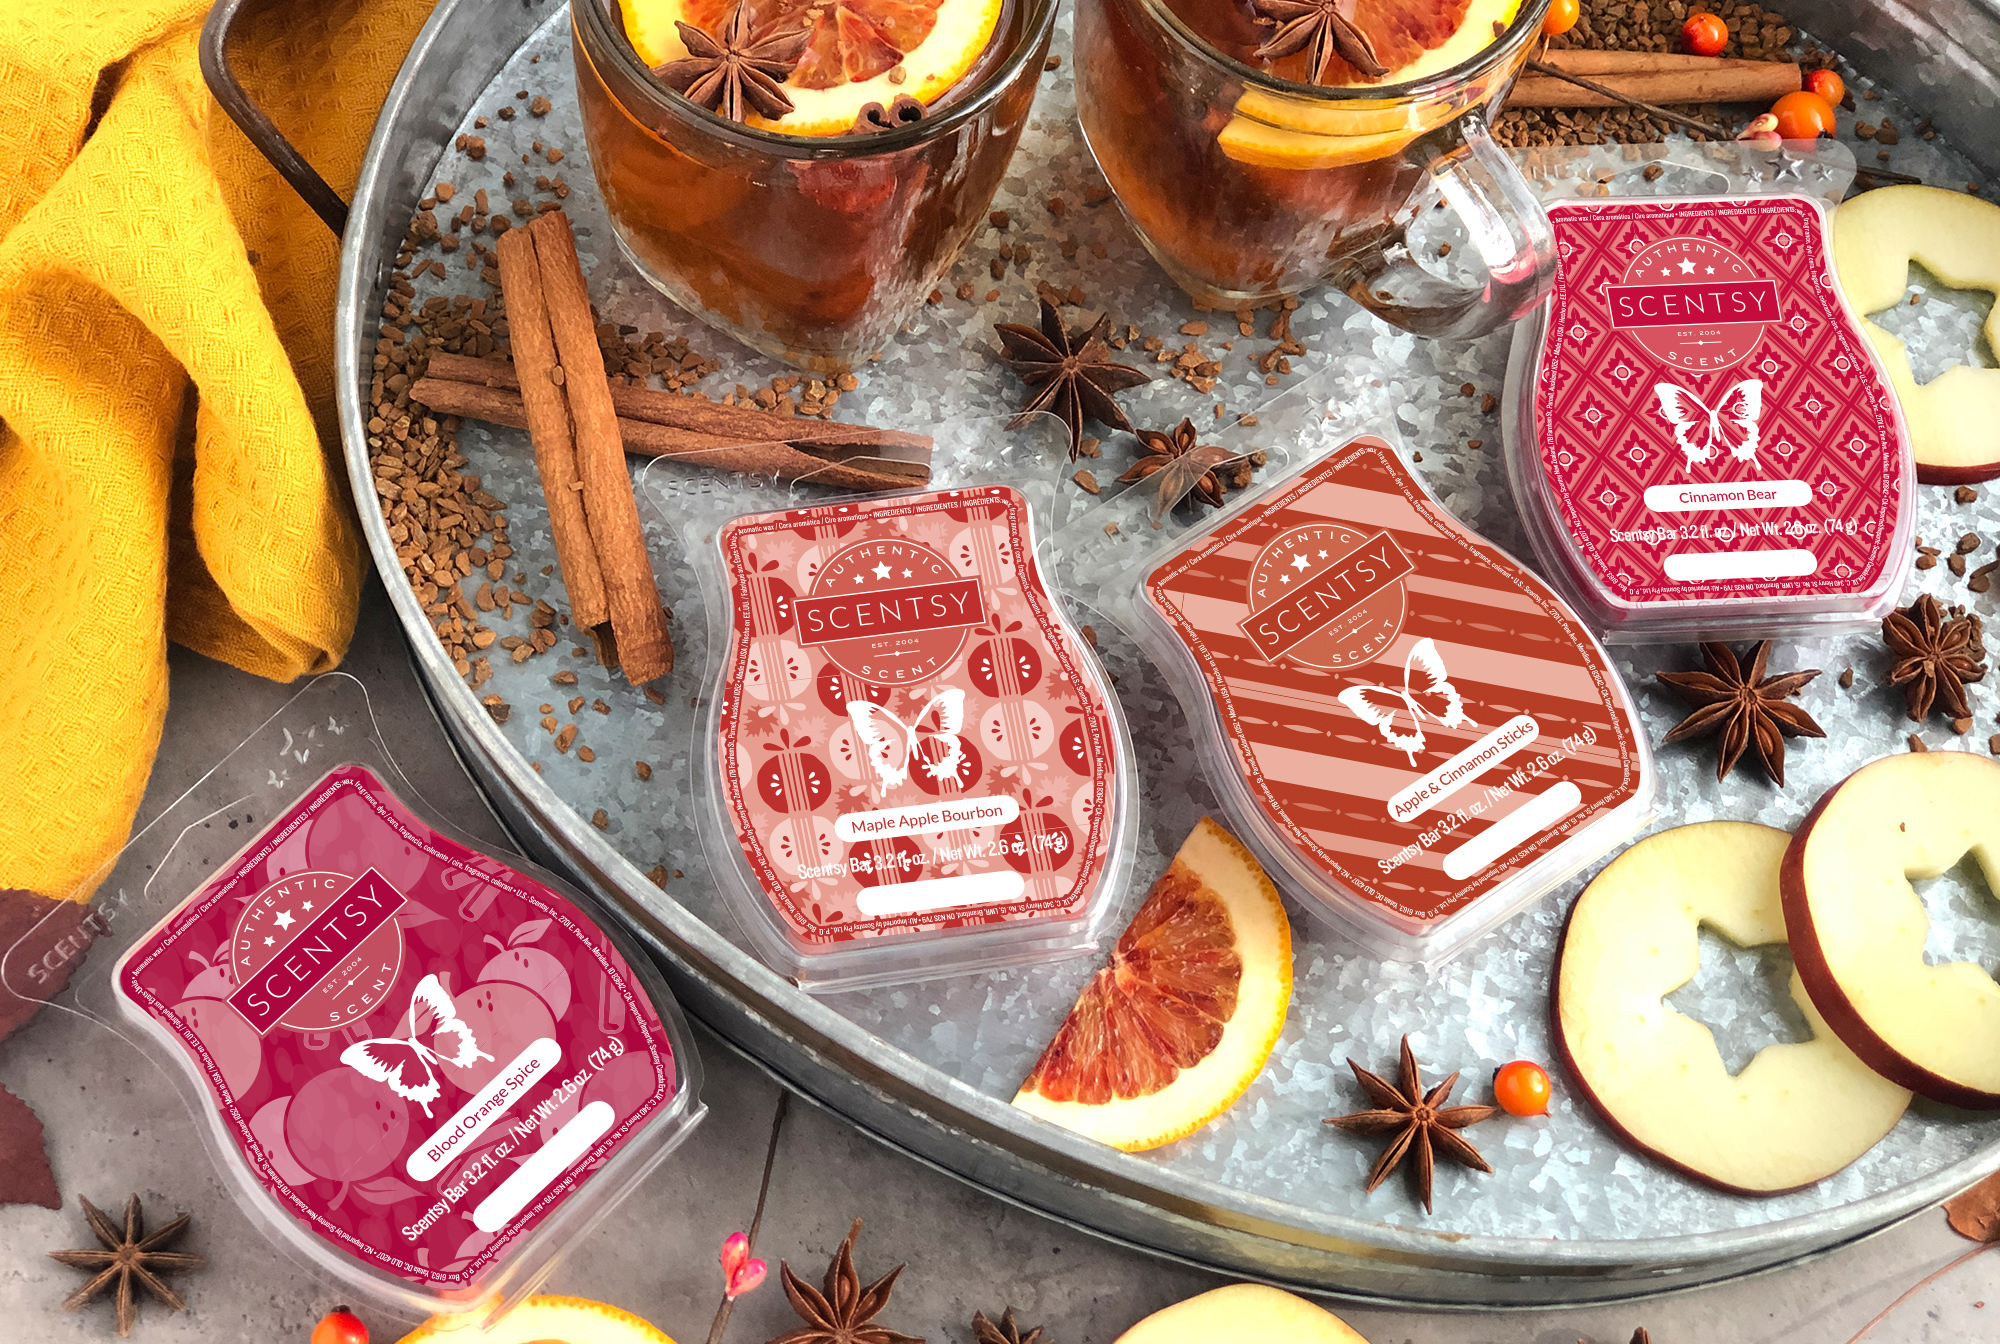 9-5 blog photoshoot featuring: Blood Orange Spice, Maple Apple Bourbon, Apple & Cinnamon Sticks, Cinnamon Bear